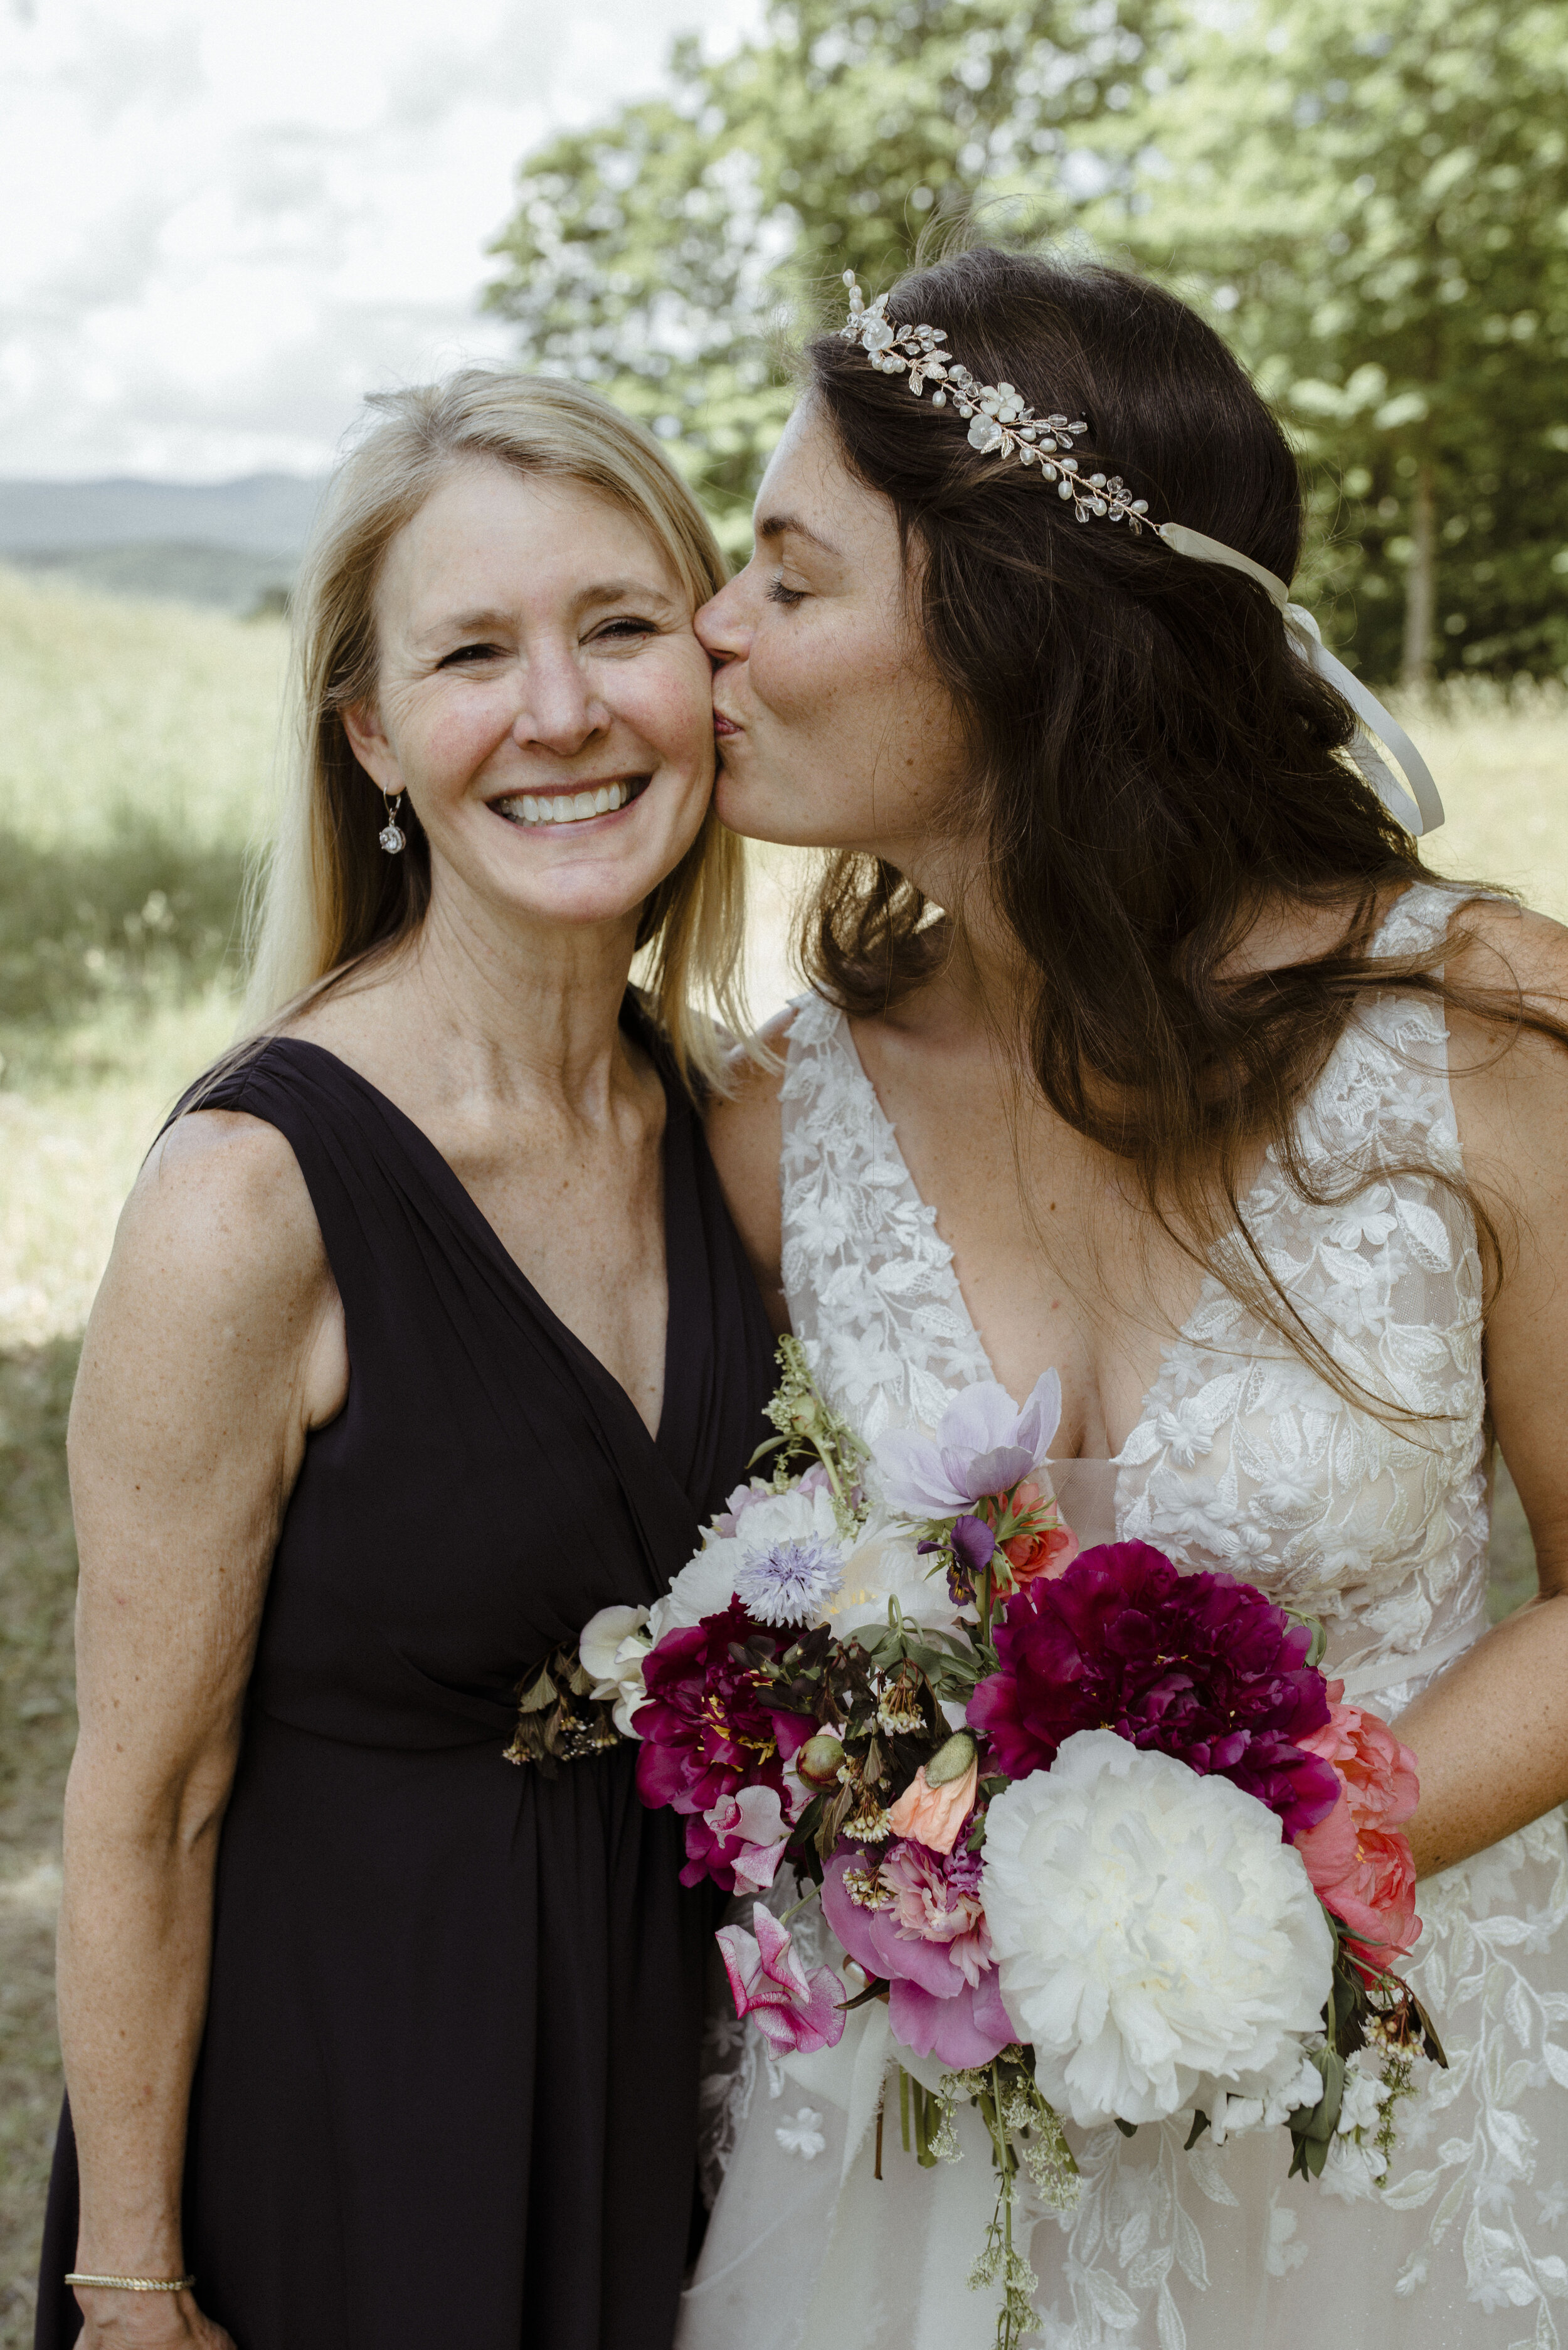 Best wedding photographers in Stowe Vermont 